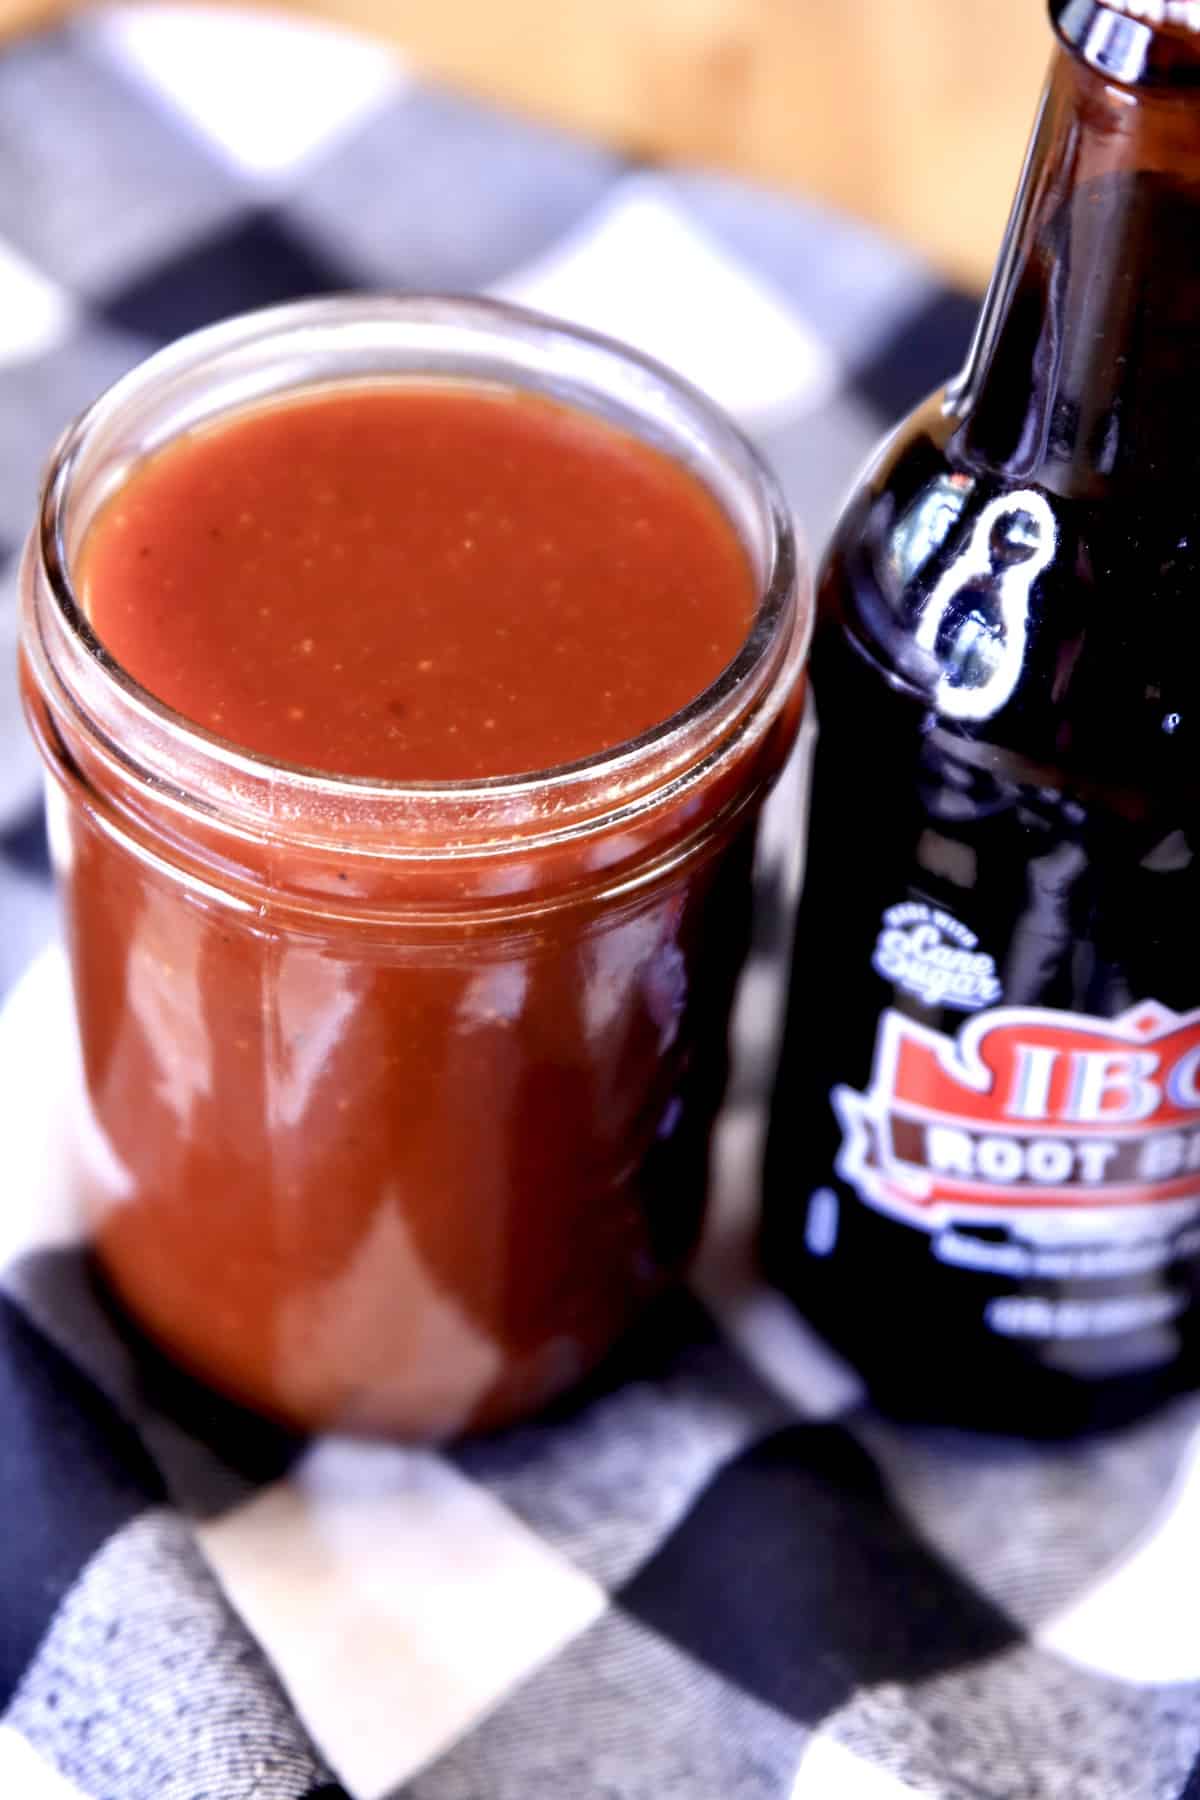 Jar of bbq sauce with bottle of root beer.